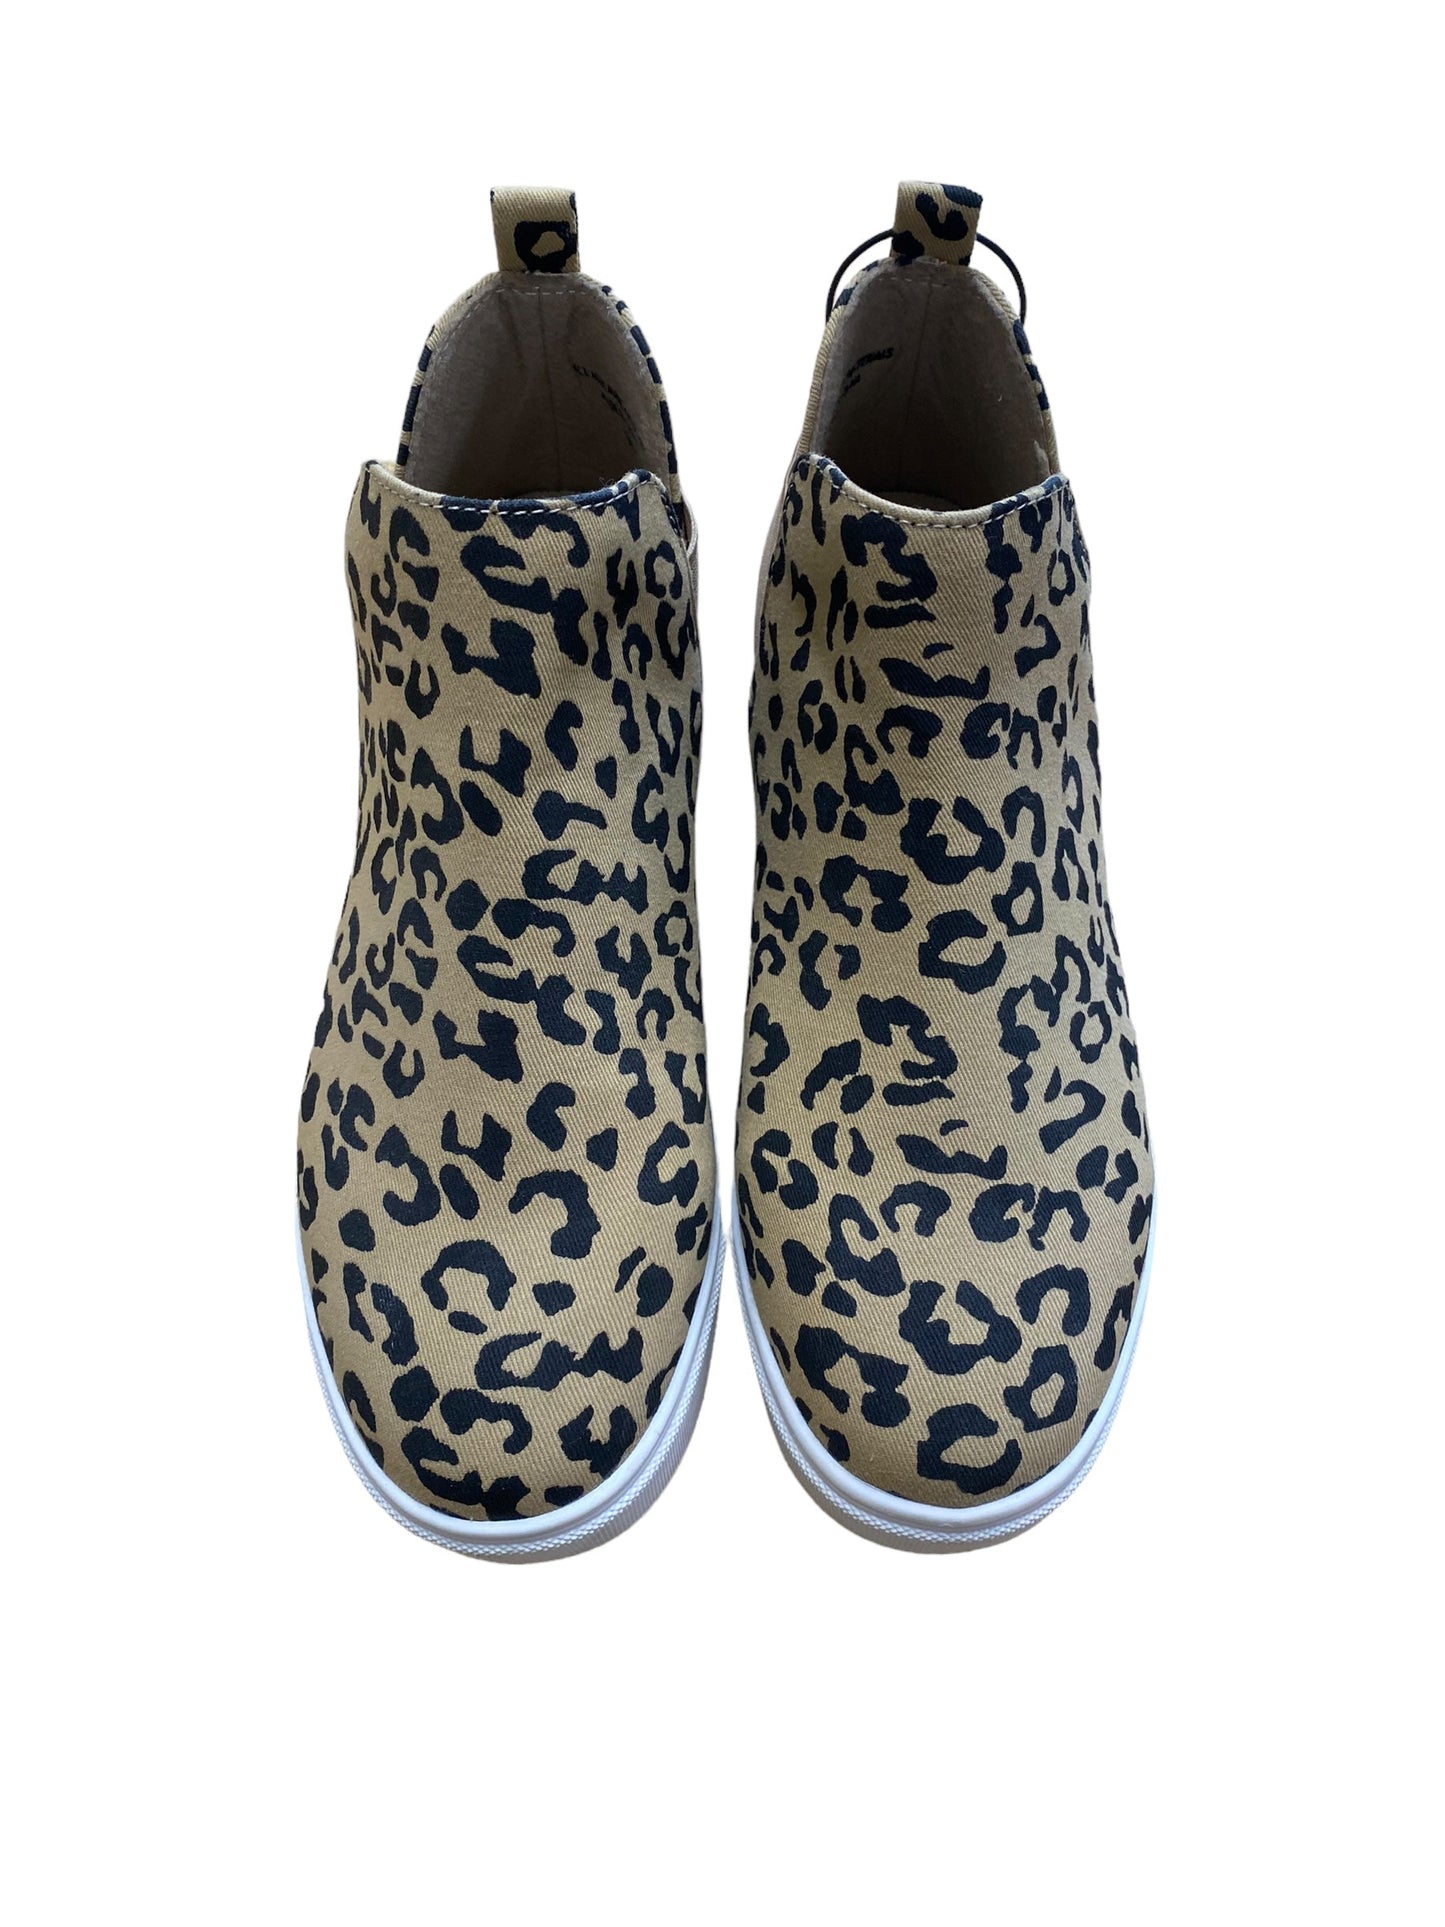 Animal Print Shoes Flats Soda, Size 8.5